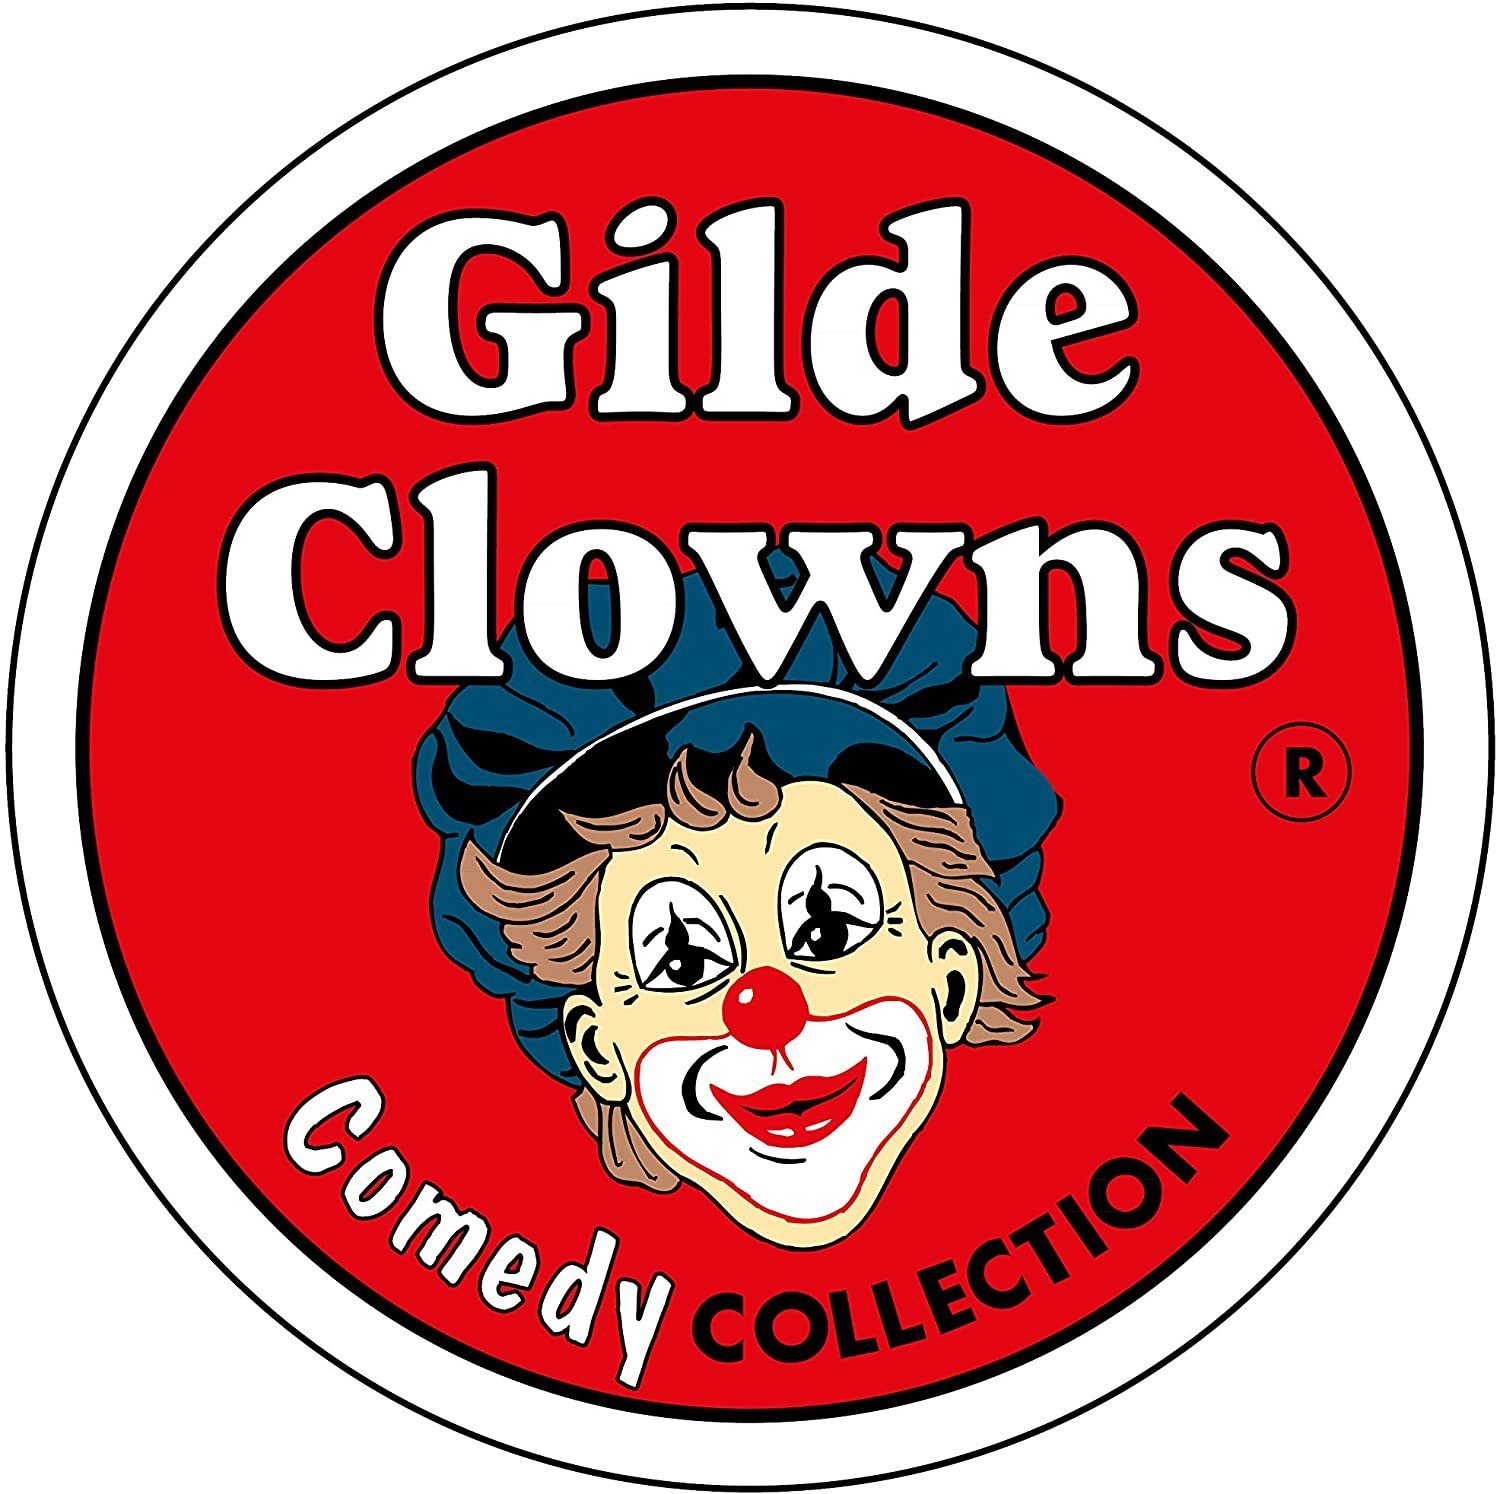 GILDE Dekofigur Sammelfigur - Gildeclowns Clown Indoor Florian 